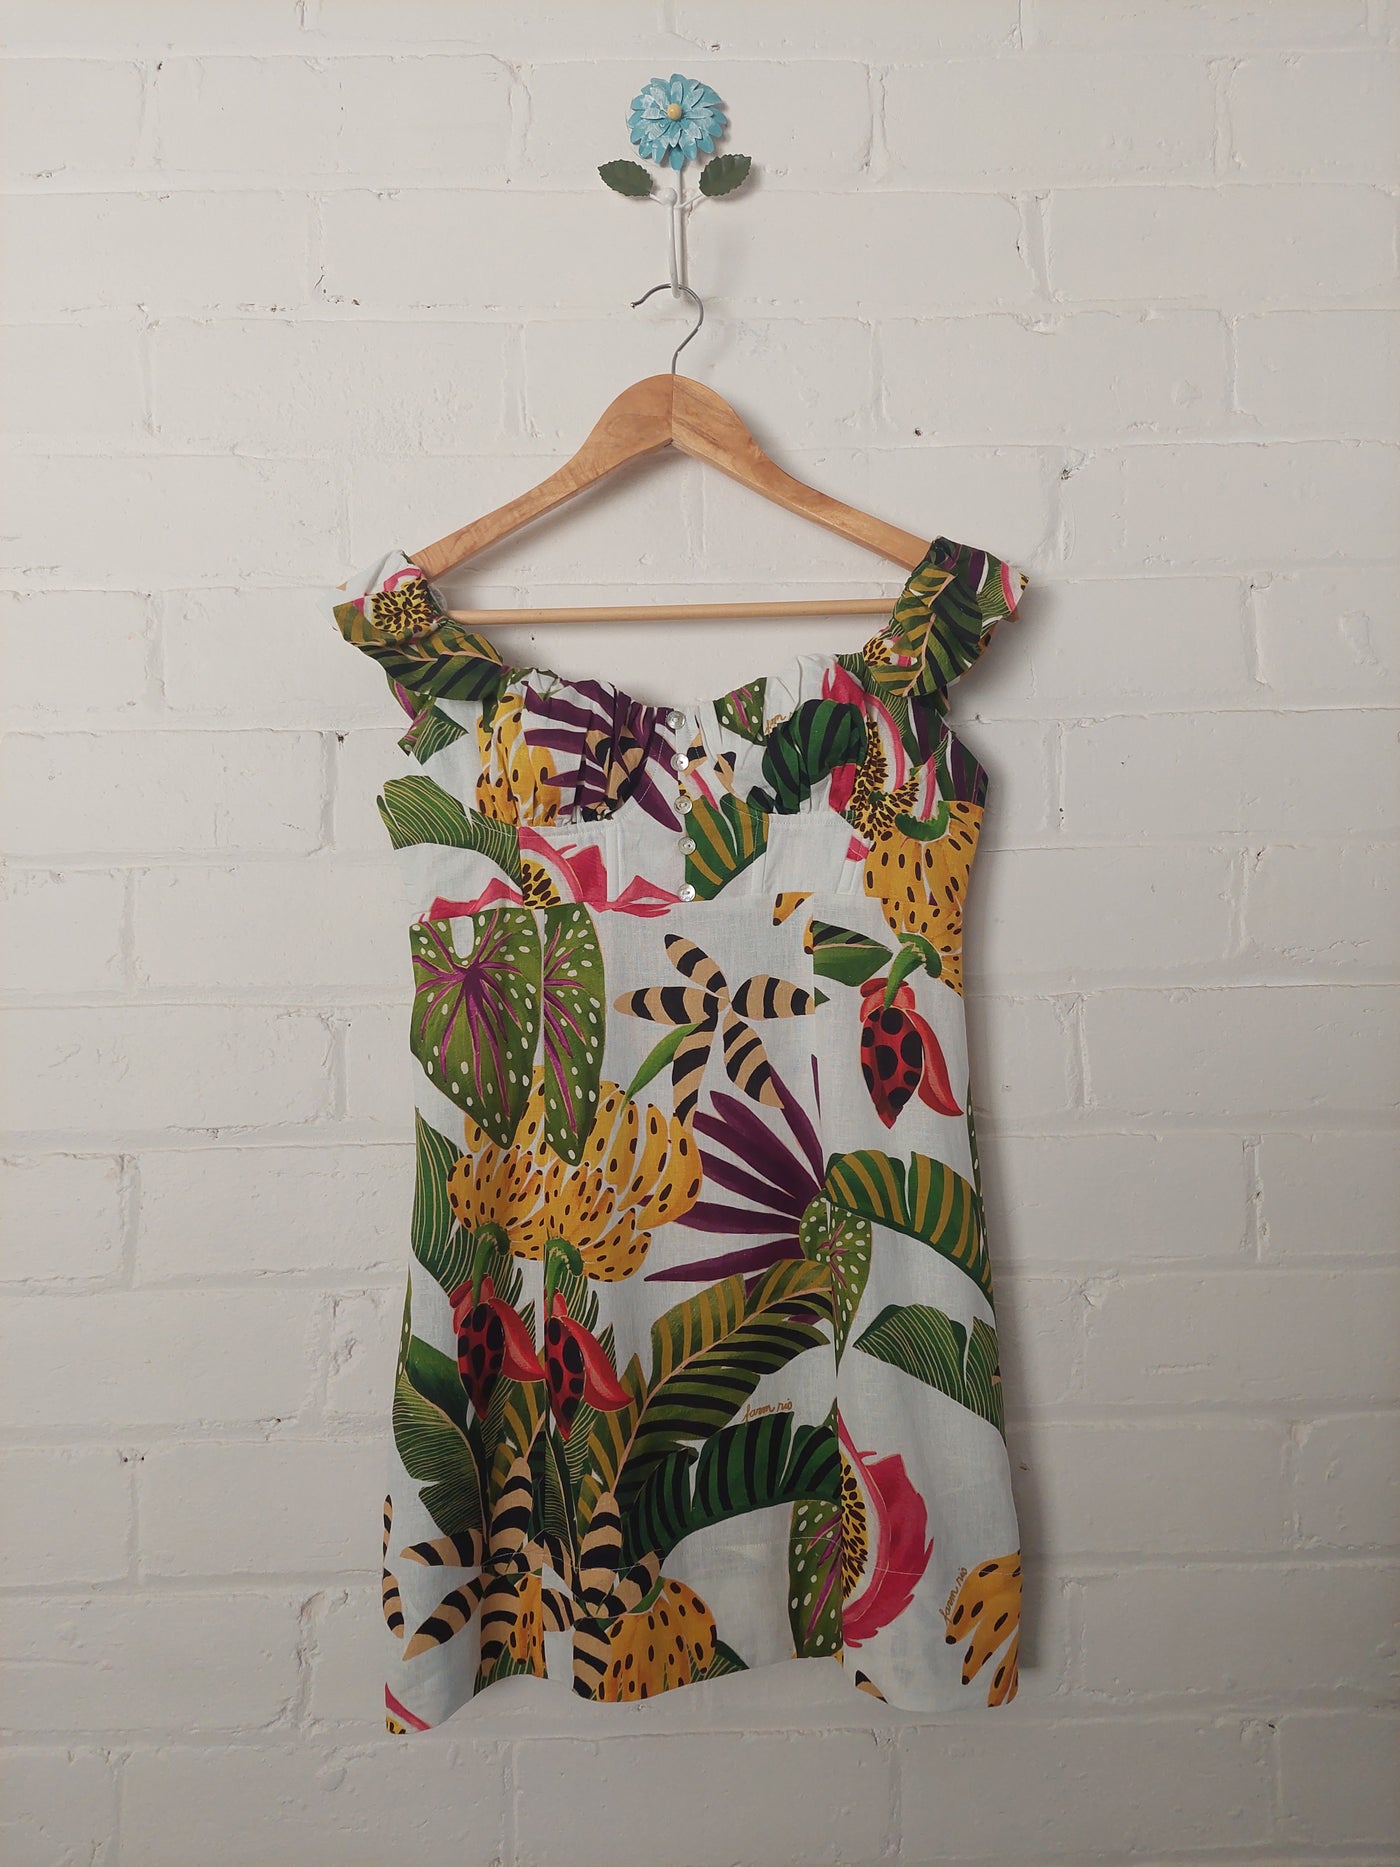 FARM Rio 'Striped Forest' Ruffled printed linen-blend Mini Dress, Size S